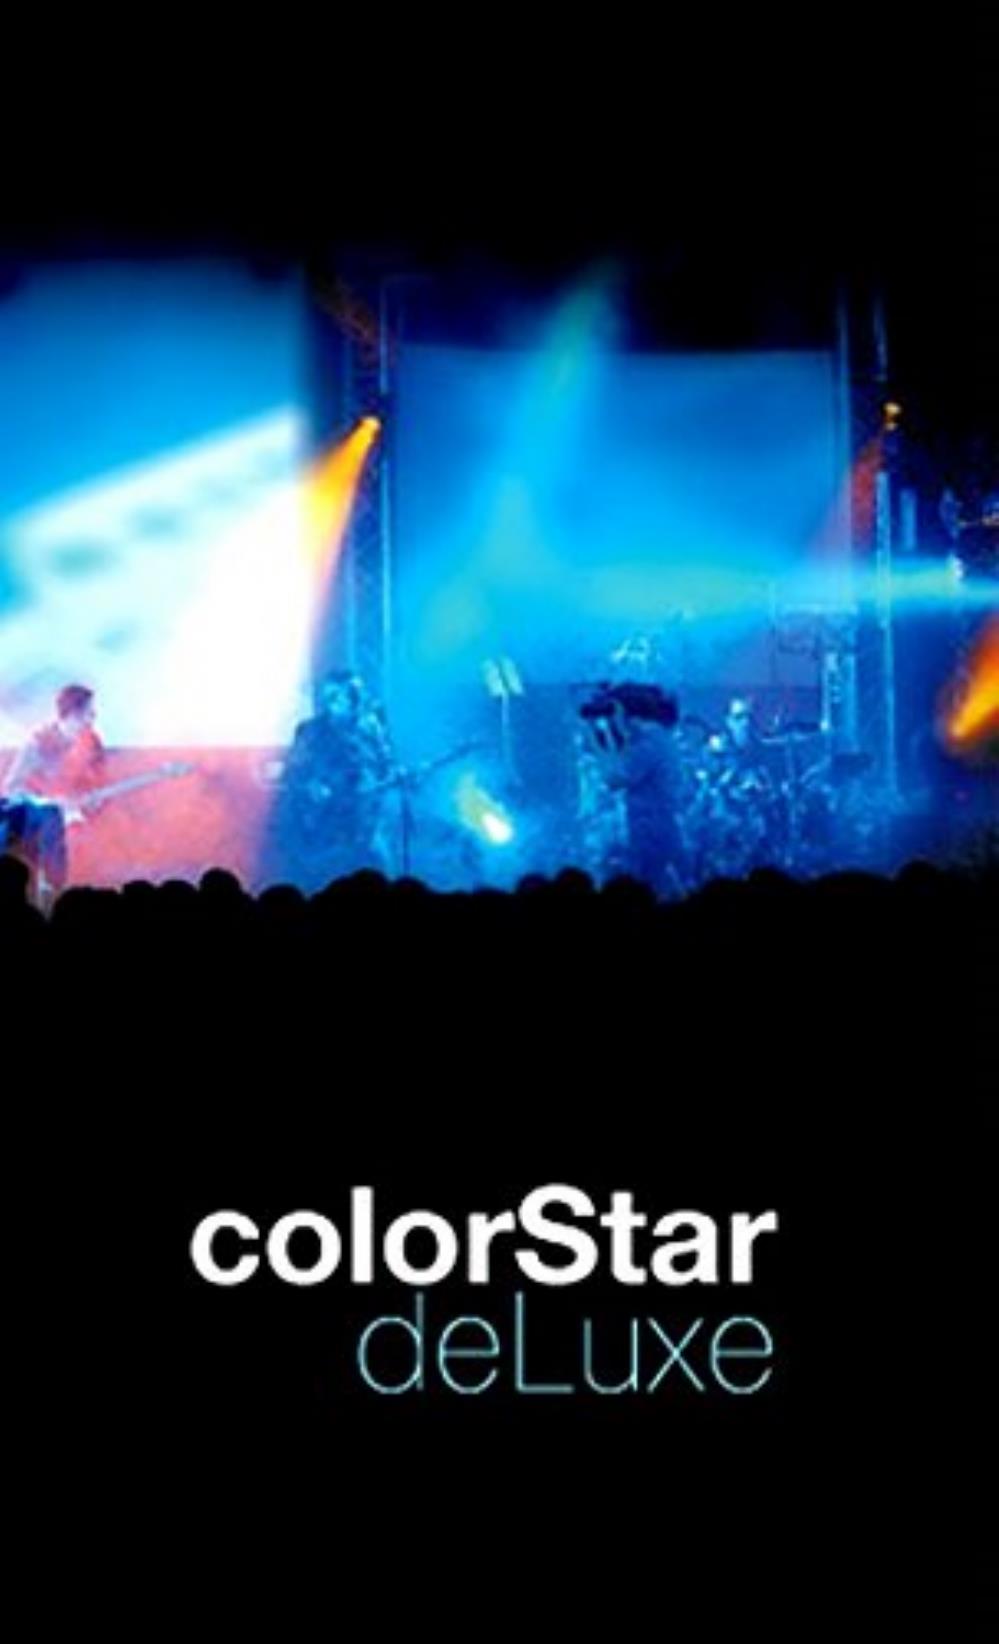 ColorStar deLuxe album cover